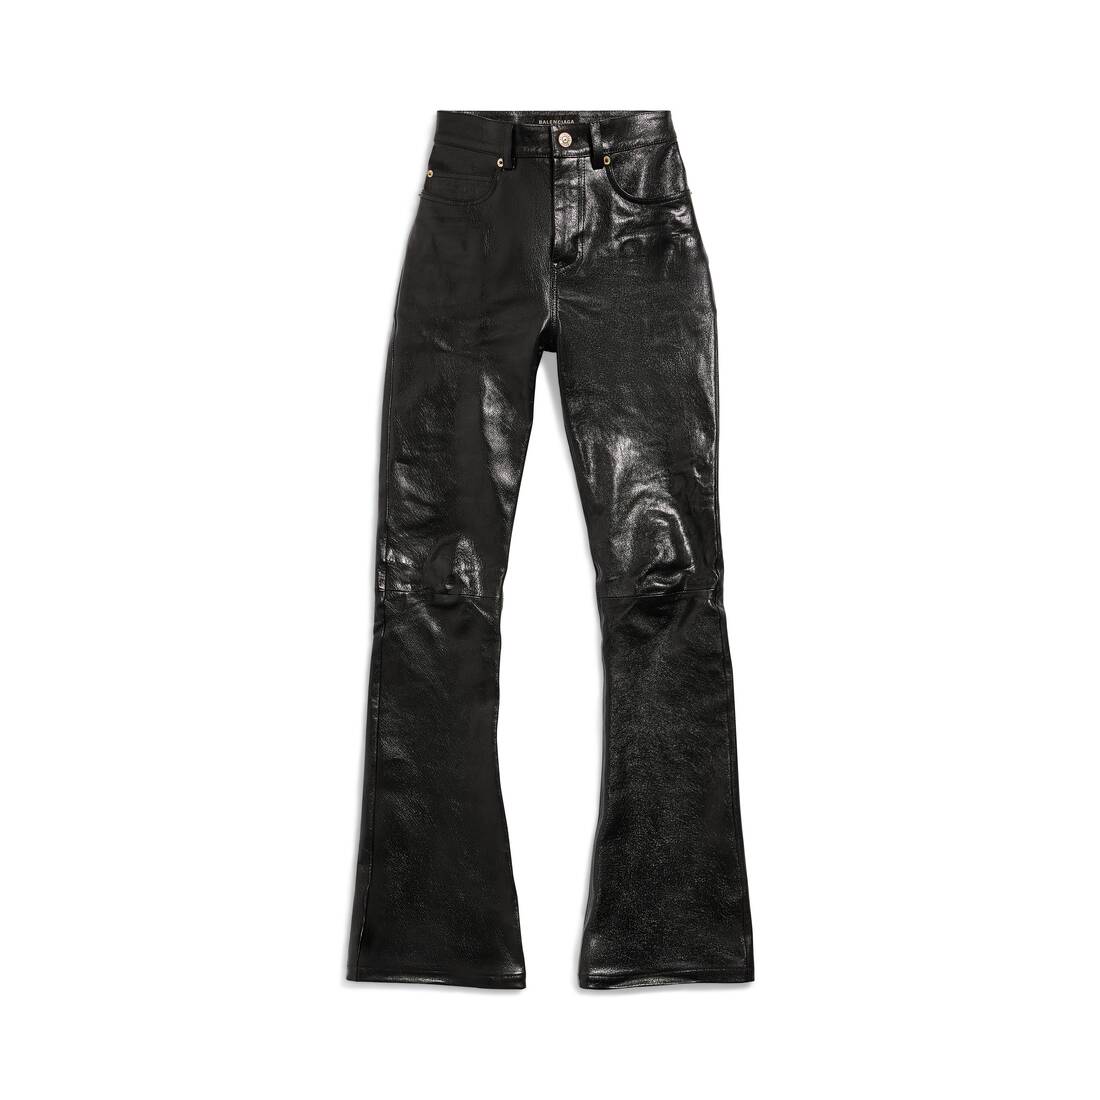 Women Boot-cut Black Leather Pants